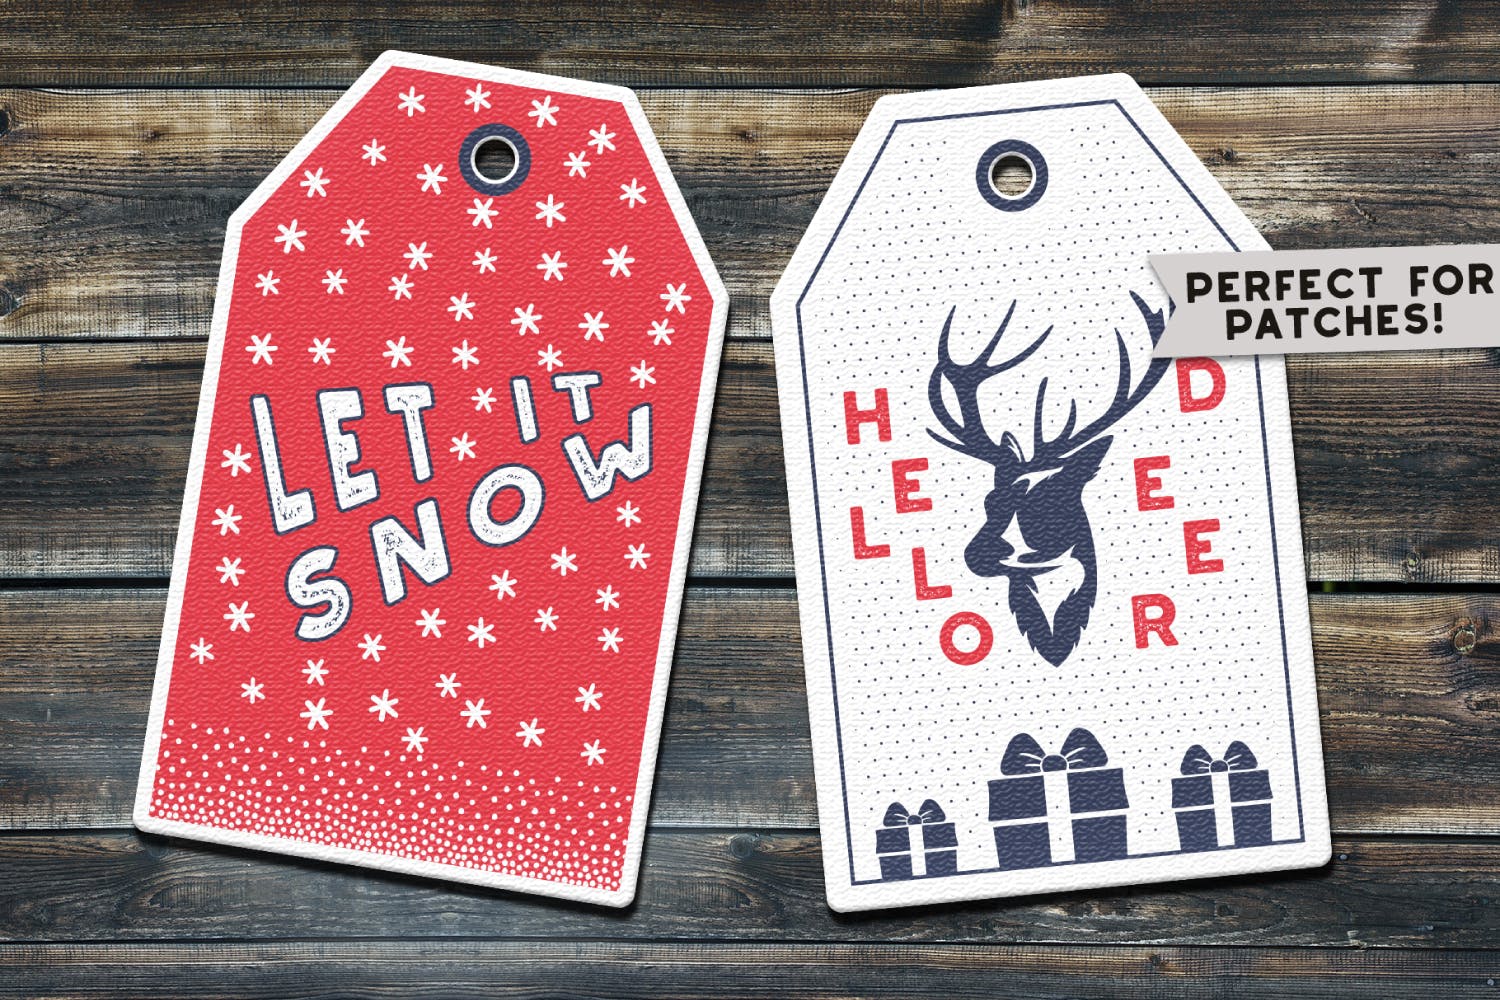 复古设计风格圣诞标签/吊牌设计模板 Retro Christmas Tags, Holiday Social Media Cards插图(1)